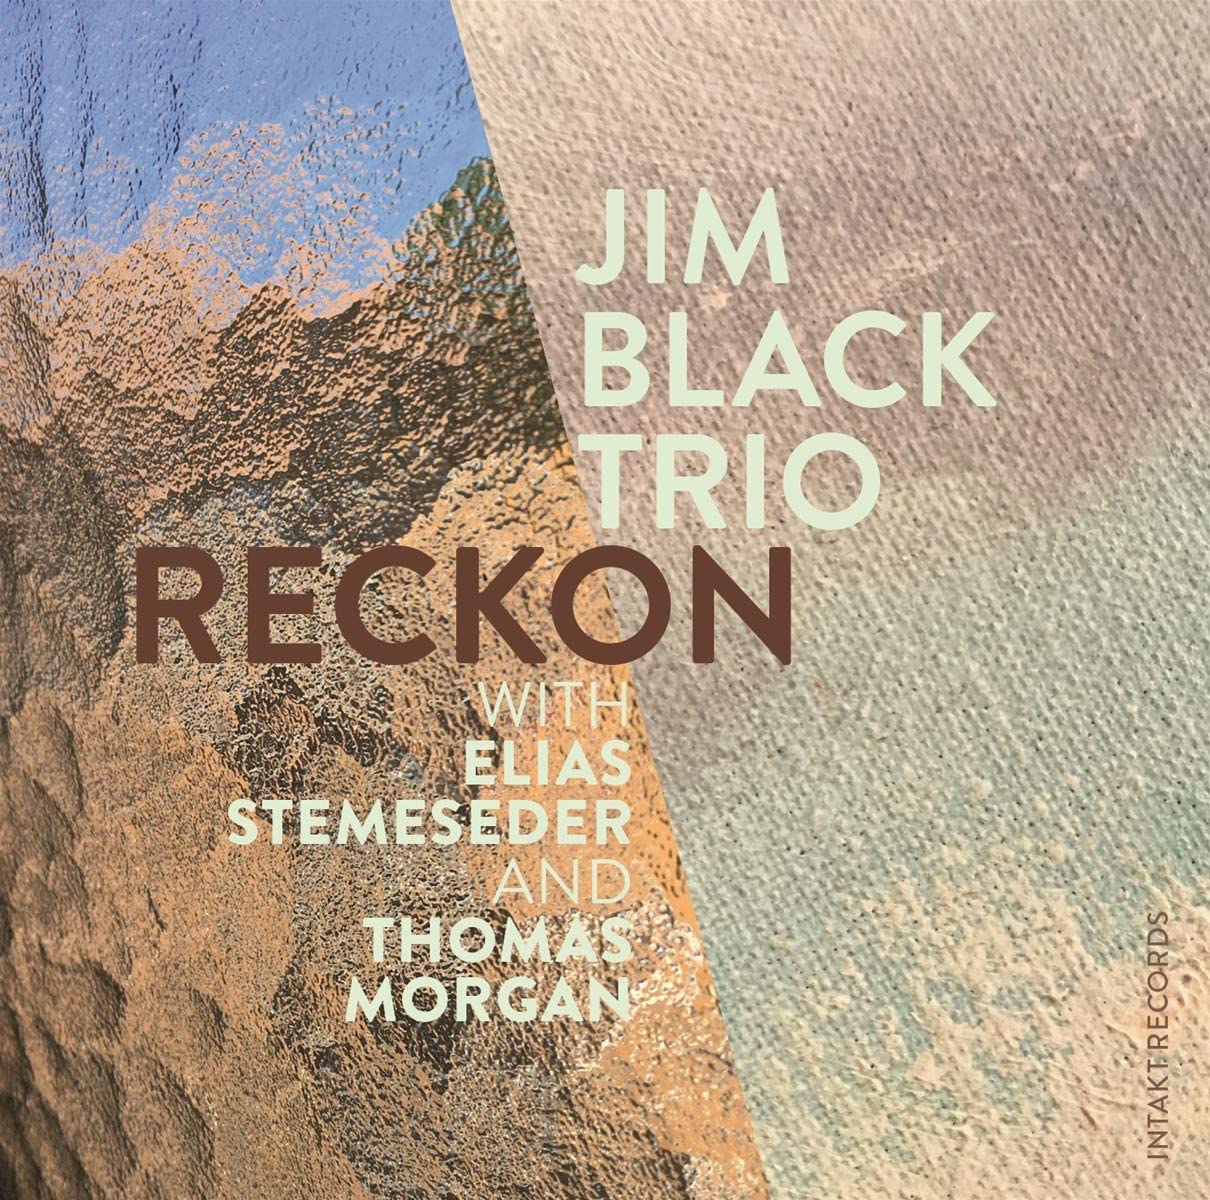 Jim Black Trio/Stemeseder/Morgan: Reckon